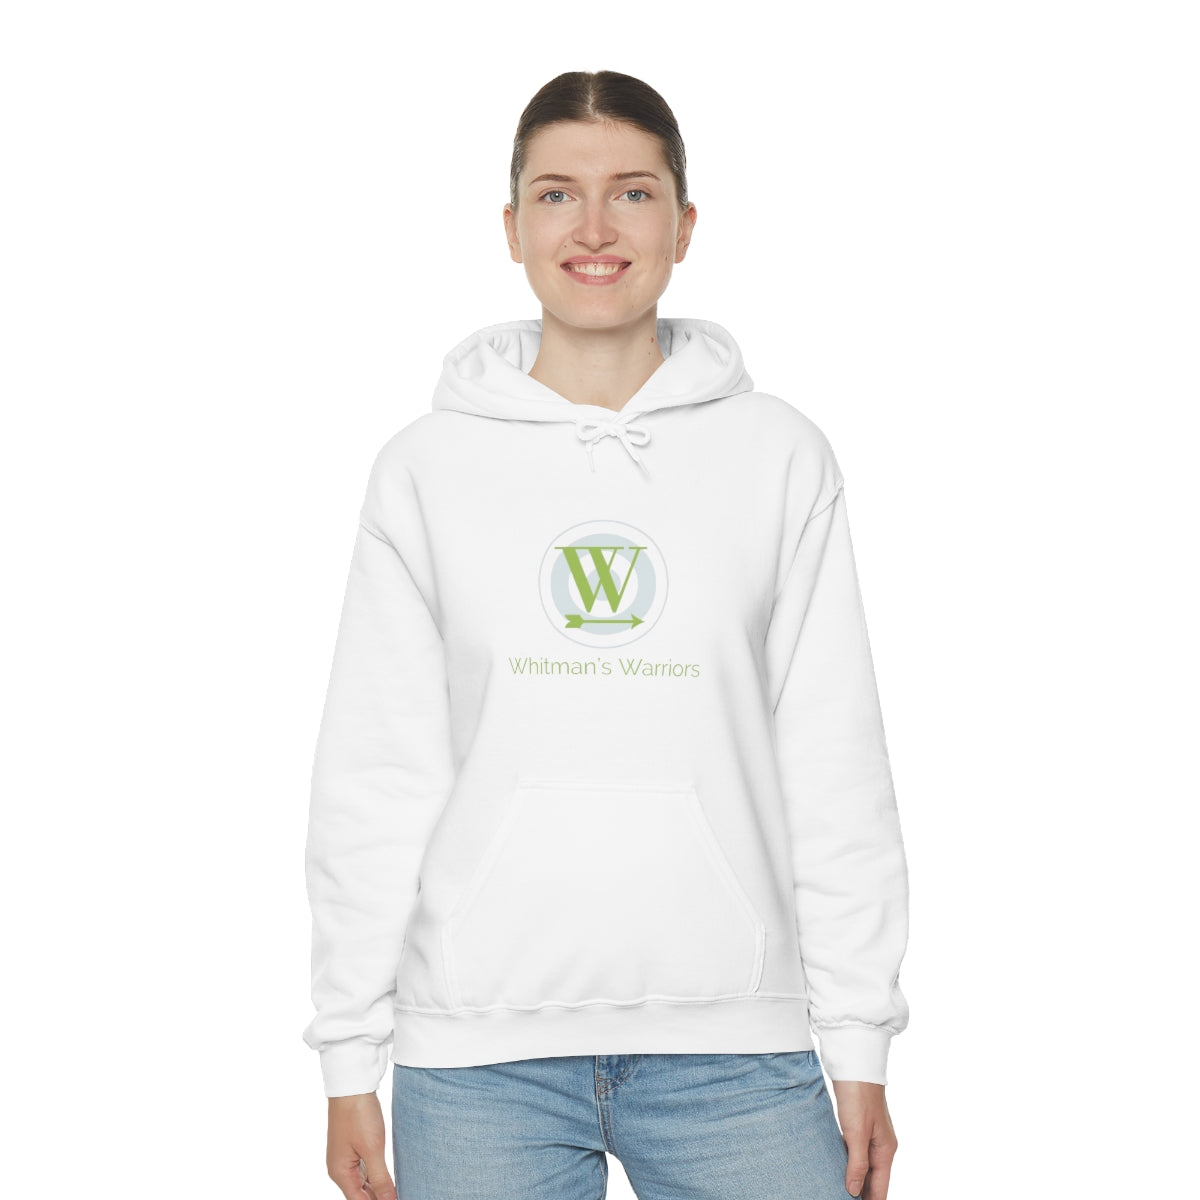 Whitman's Warriors Hooded Sweatshirt